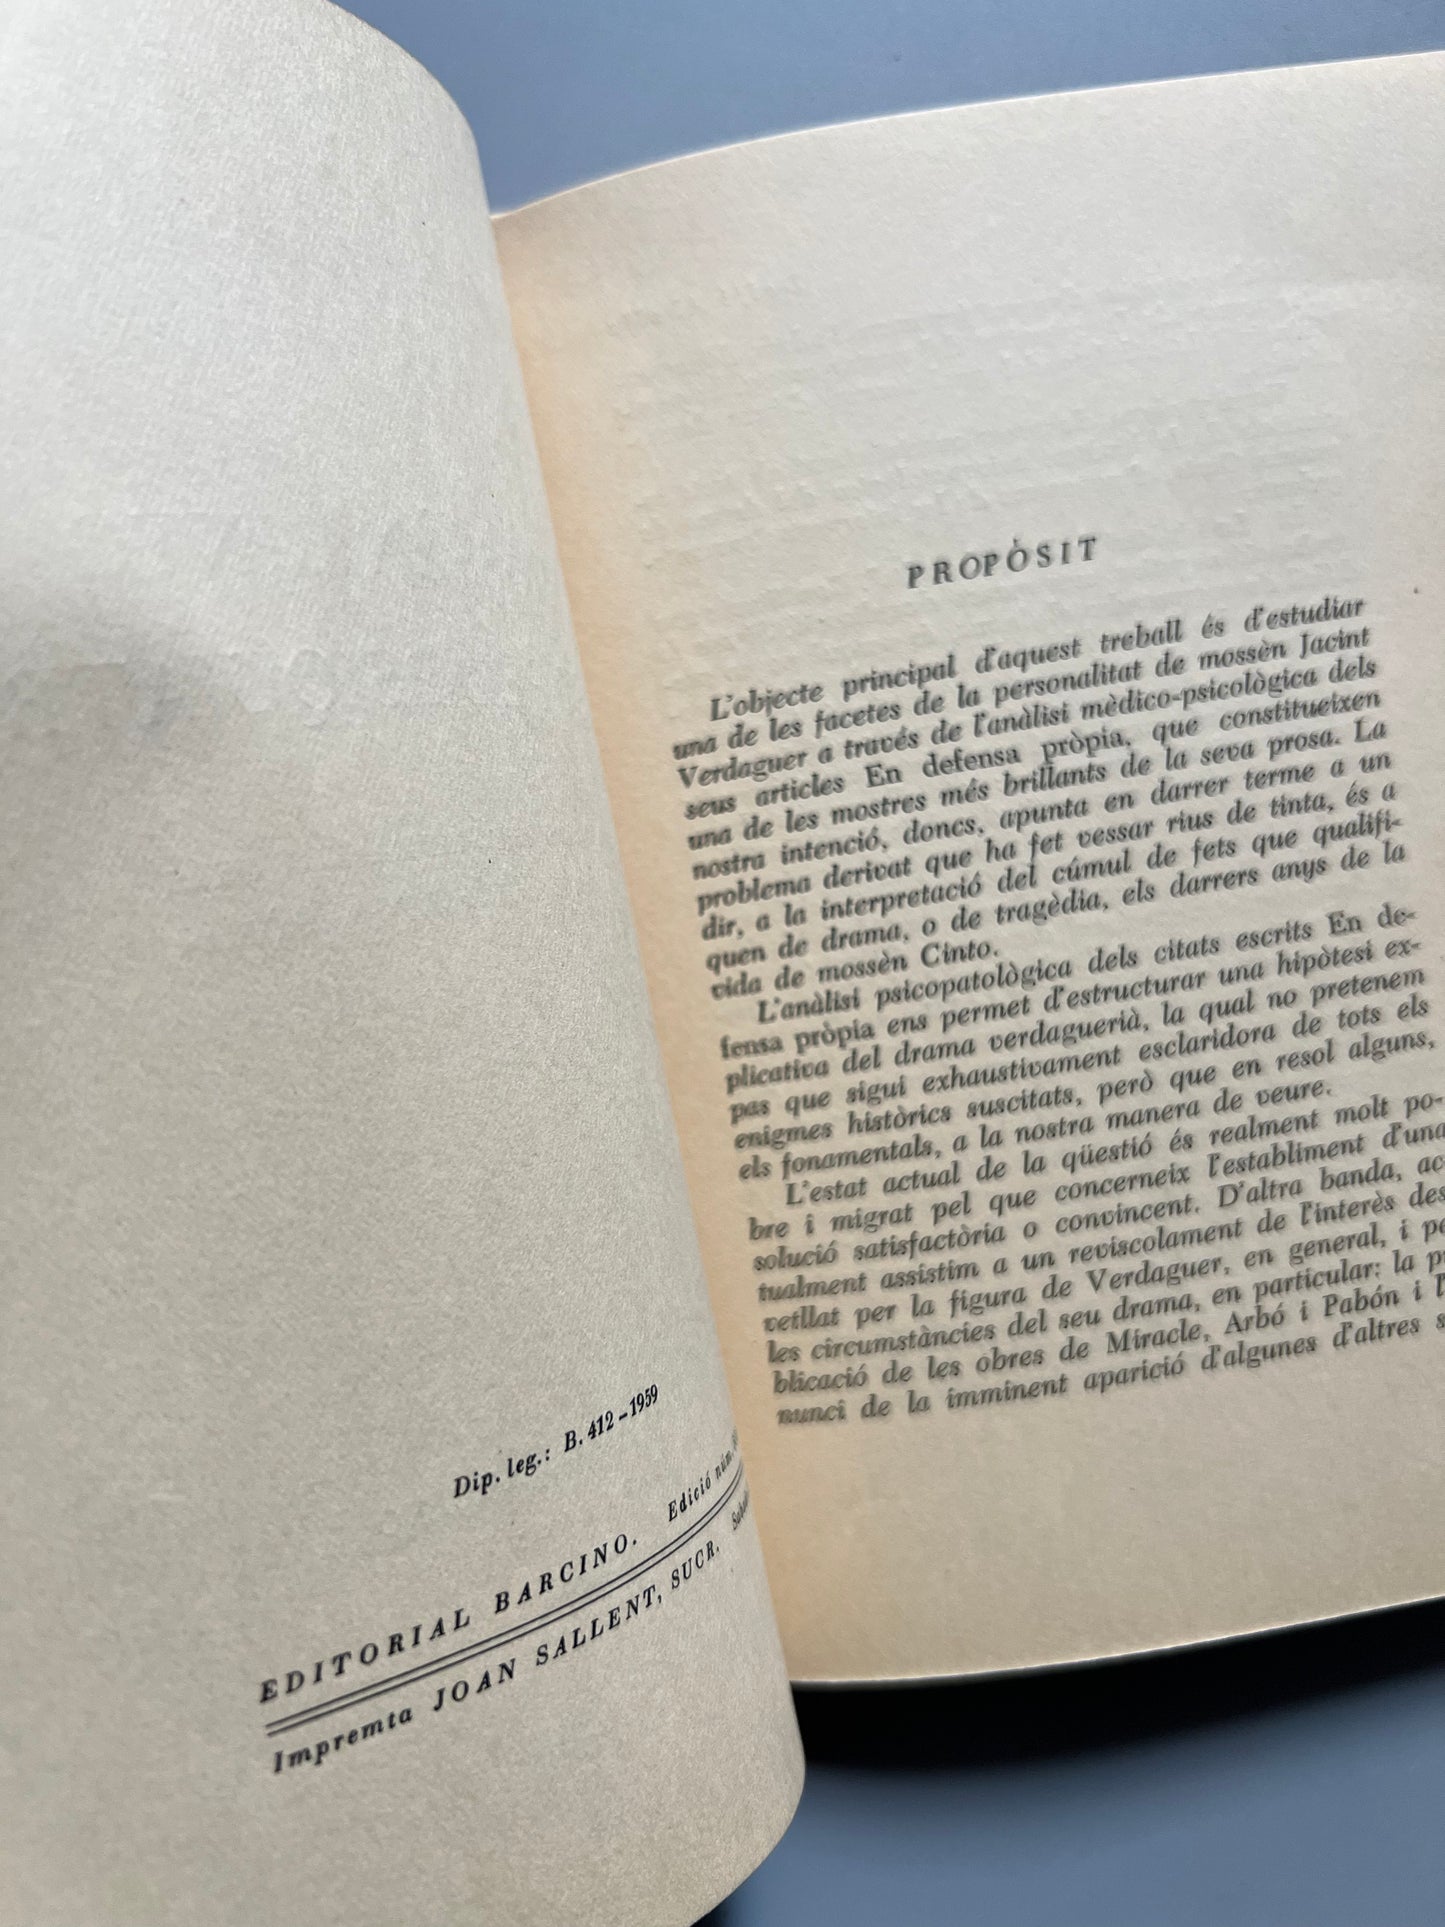 Mossèn Cinto vist pel psiquiatre, Delfí Abella (ejemplar numerado, nº314 - Editorial Barcino, 1958